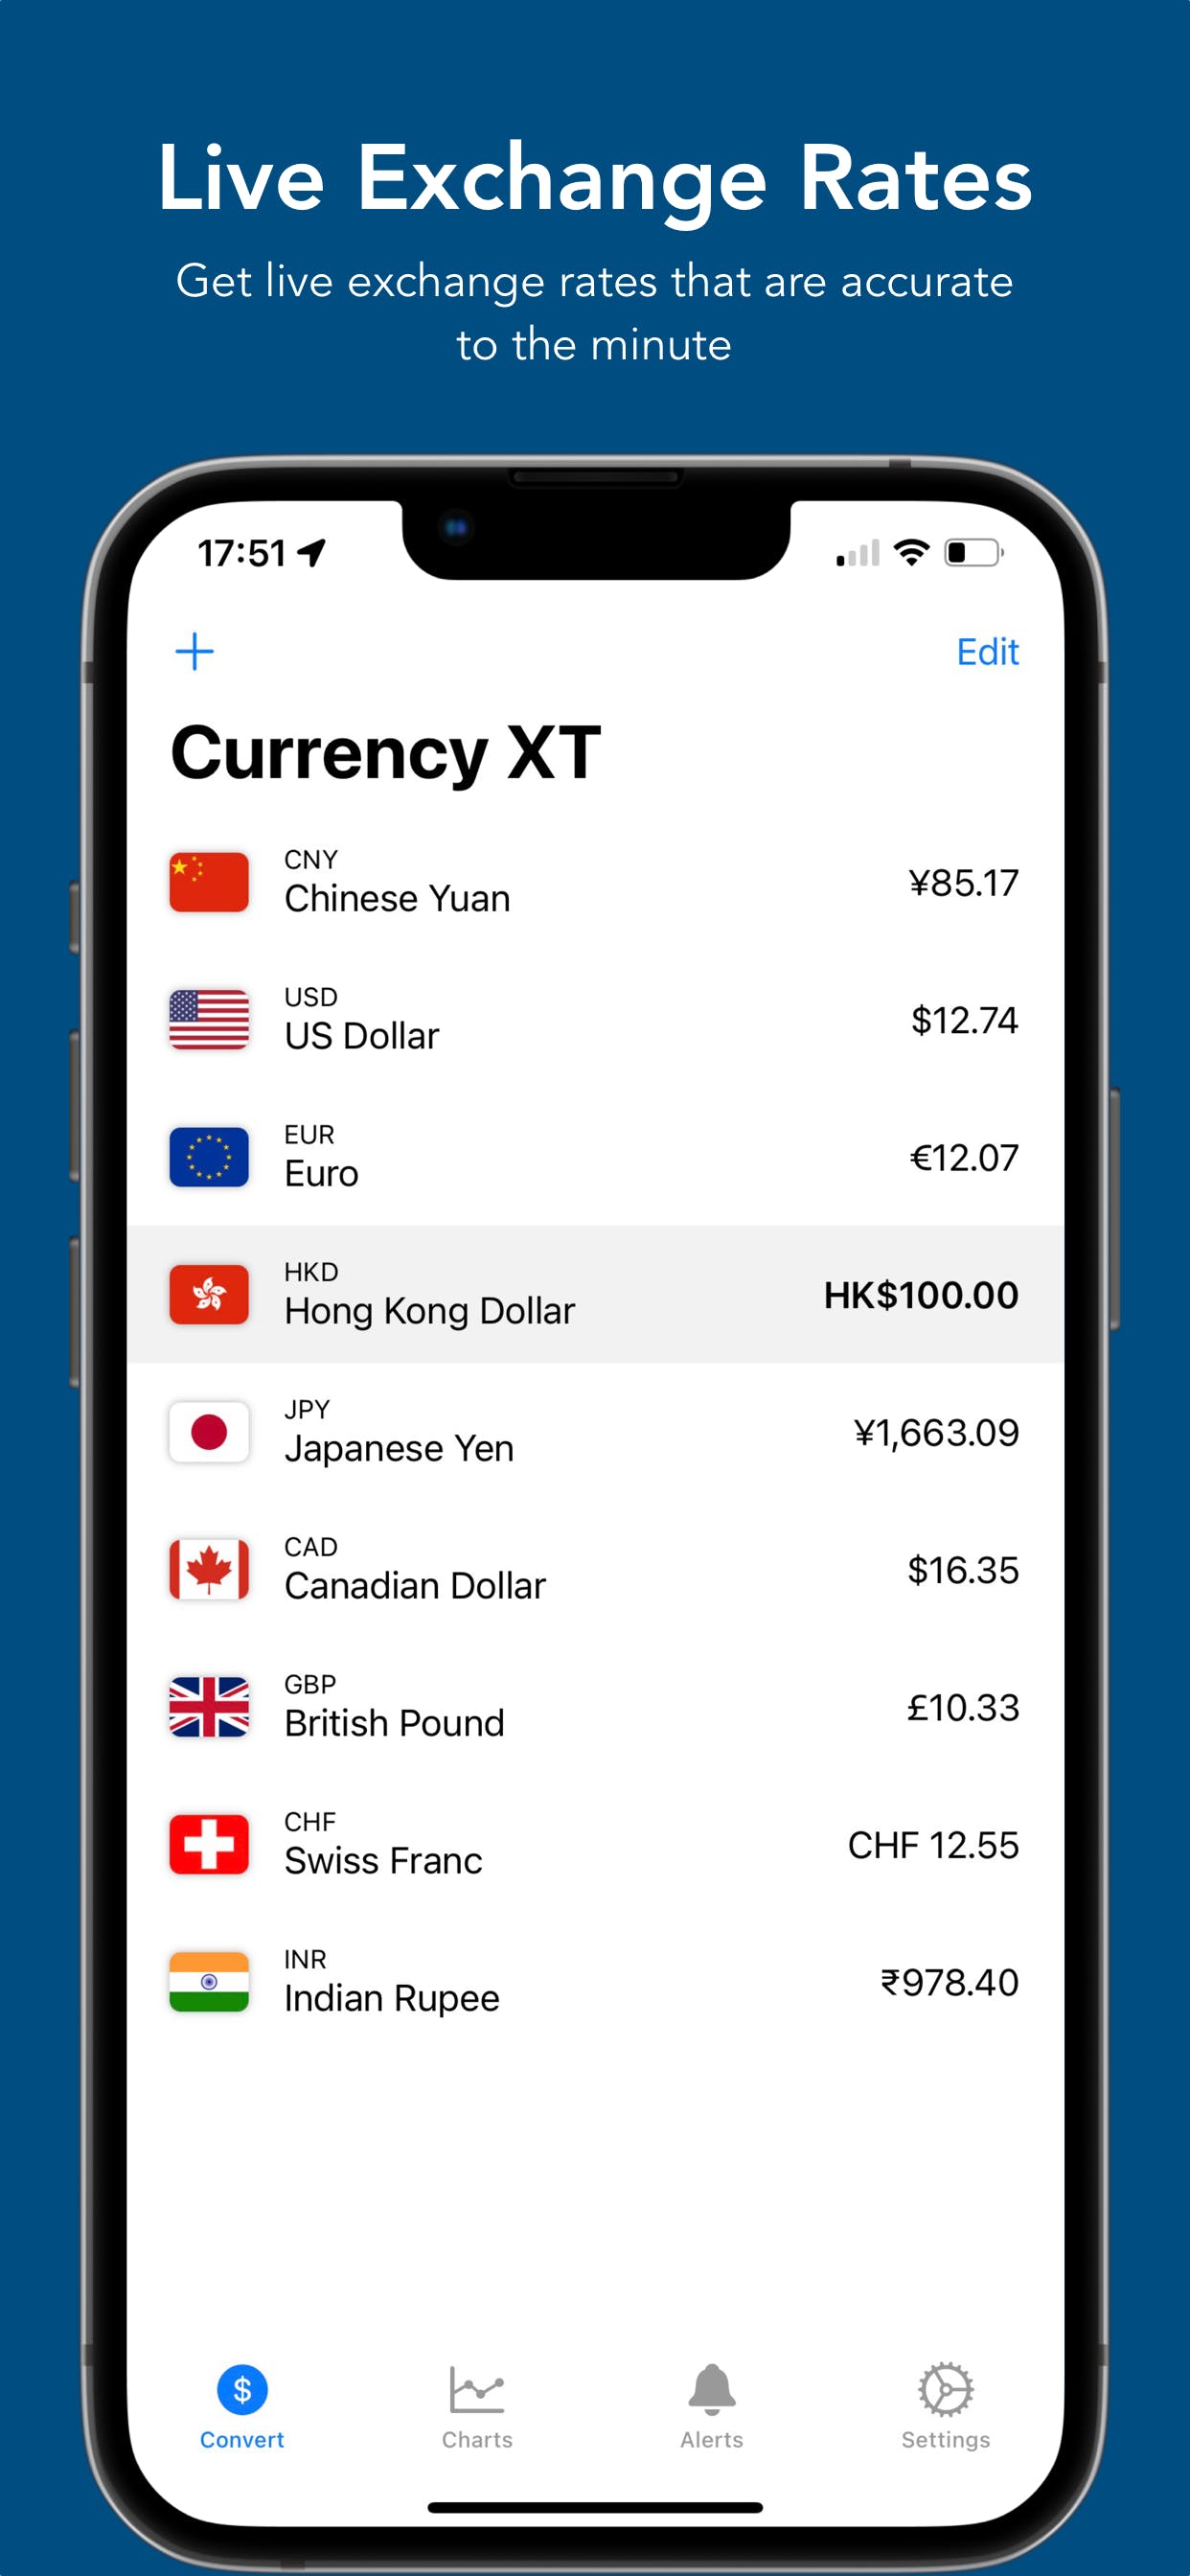 Currency XT media 1